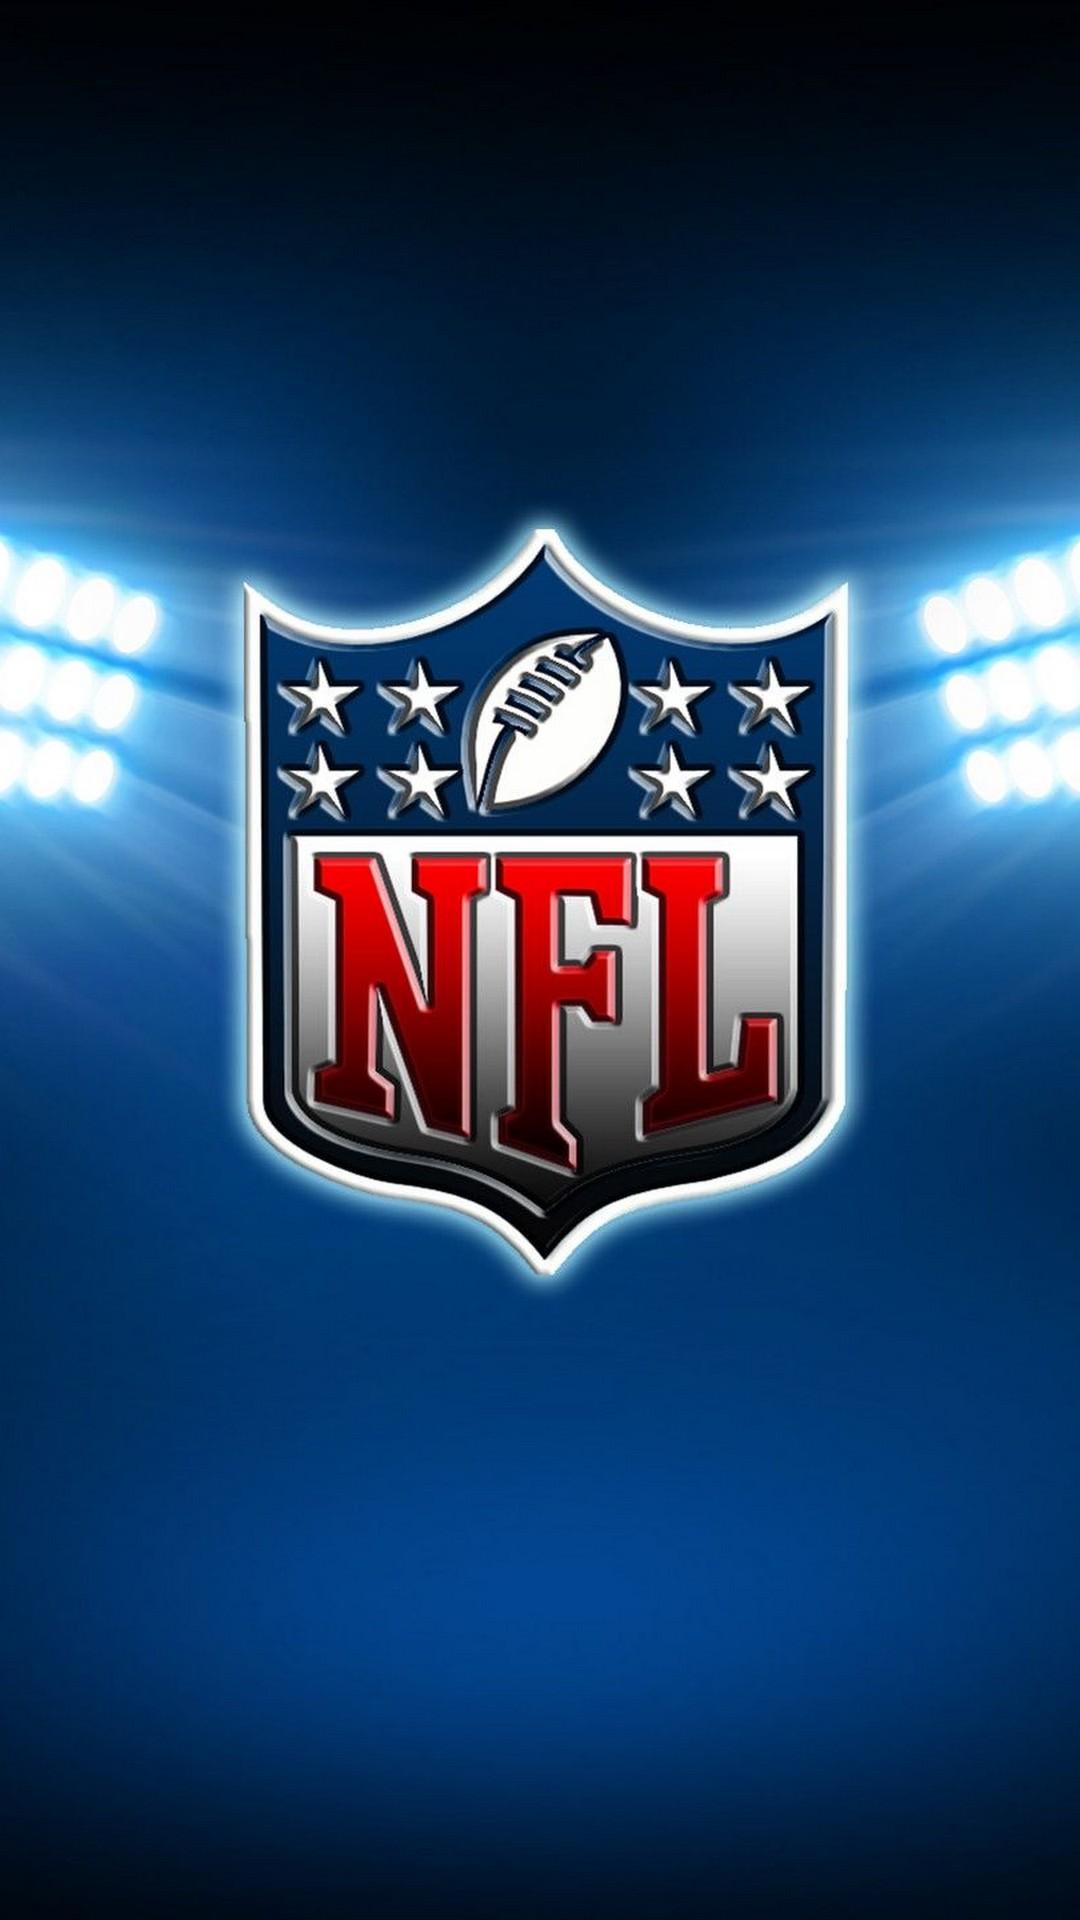 NFL iPhone 6 Wallpaper NFL Football Wallpaper